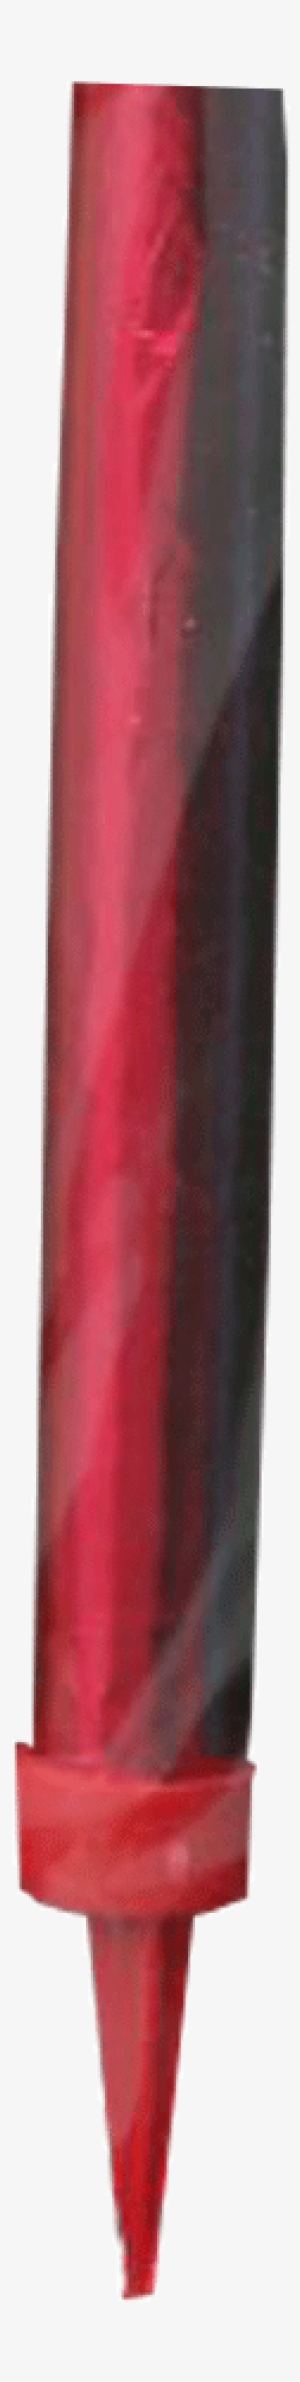 Red Bottle Sparklers - Marking Tools